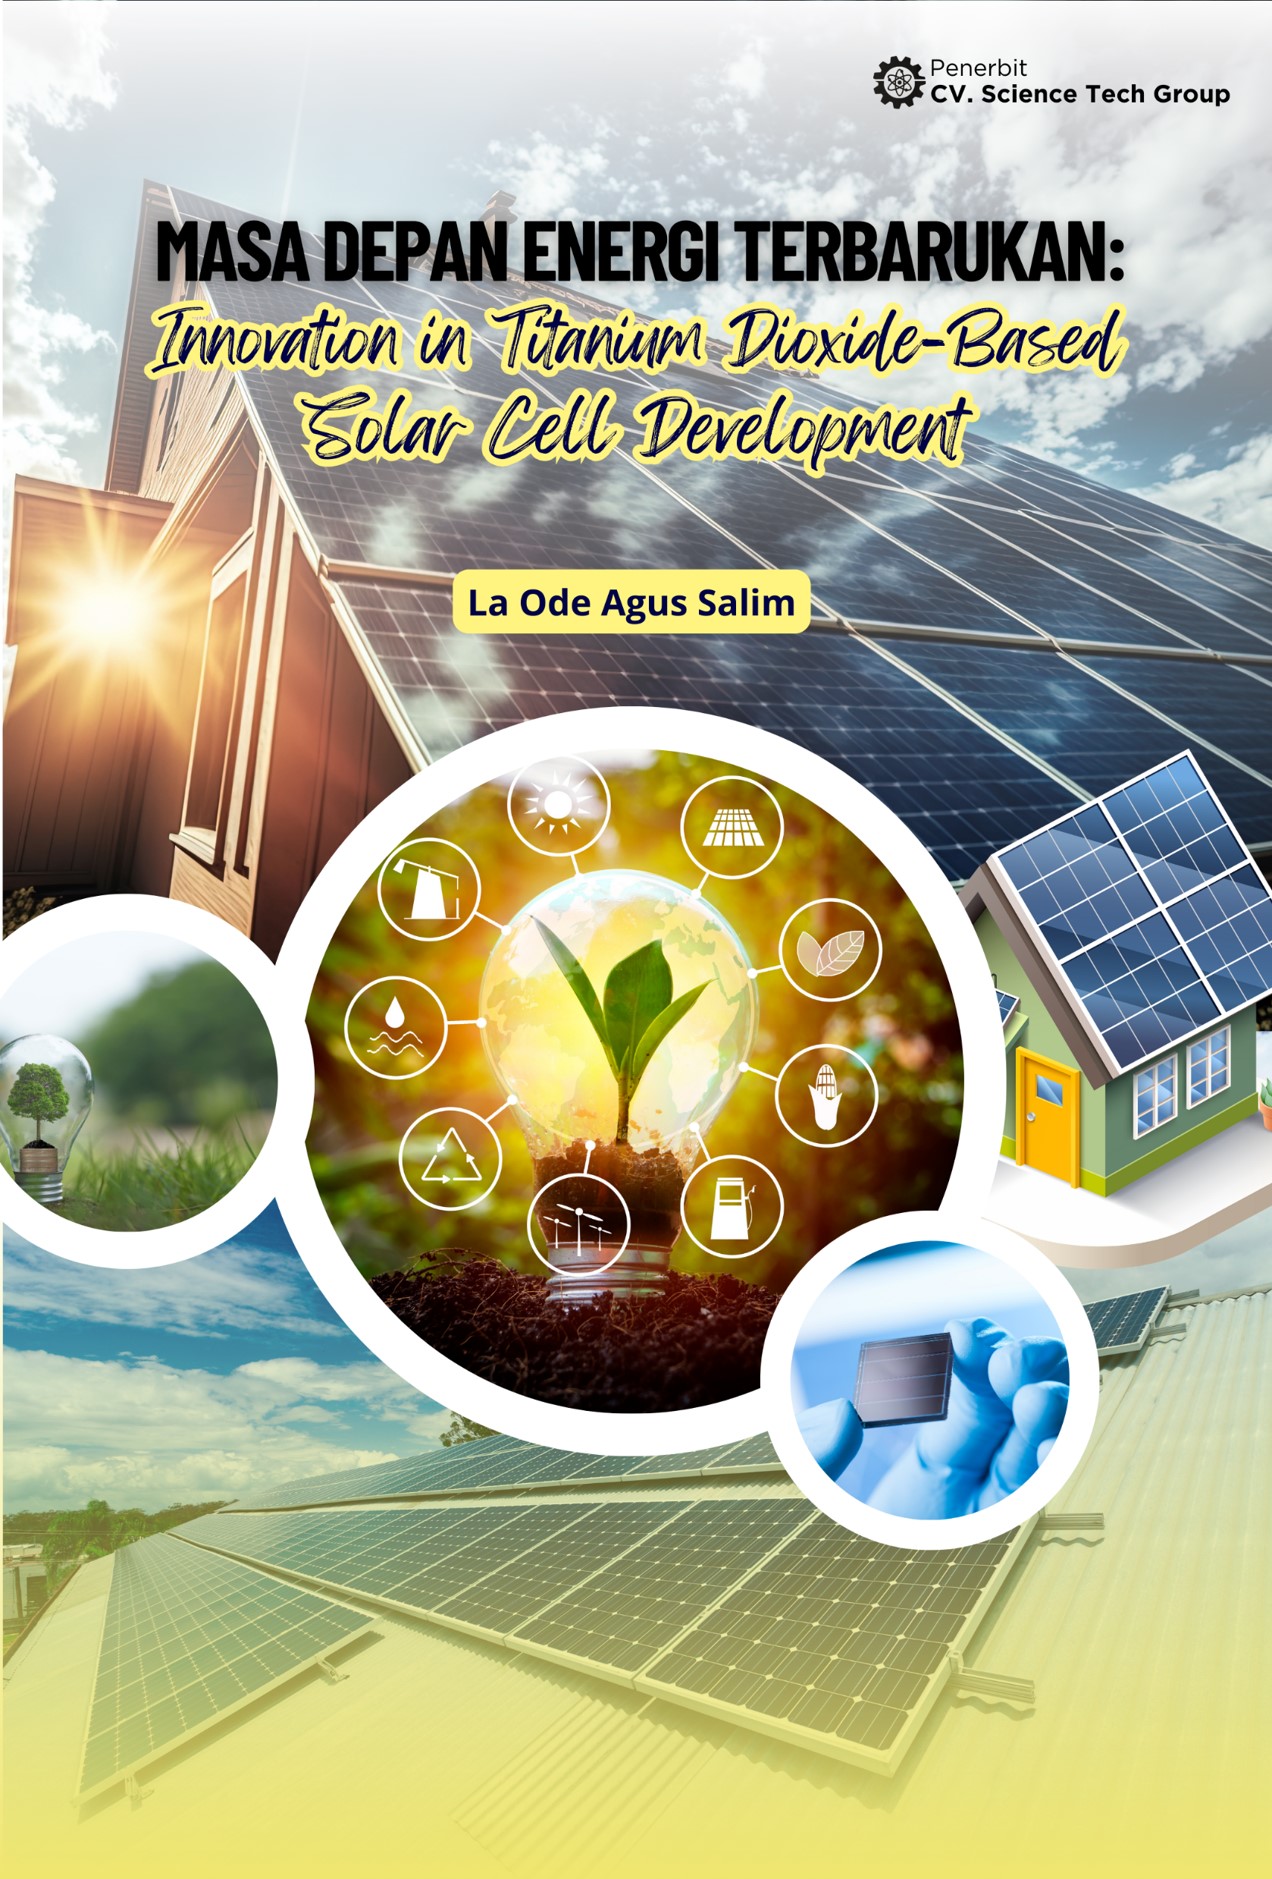 Masa Depan Energi Terbarukan: Innovation in Titanium Dioxide-Based Solar Cell Development